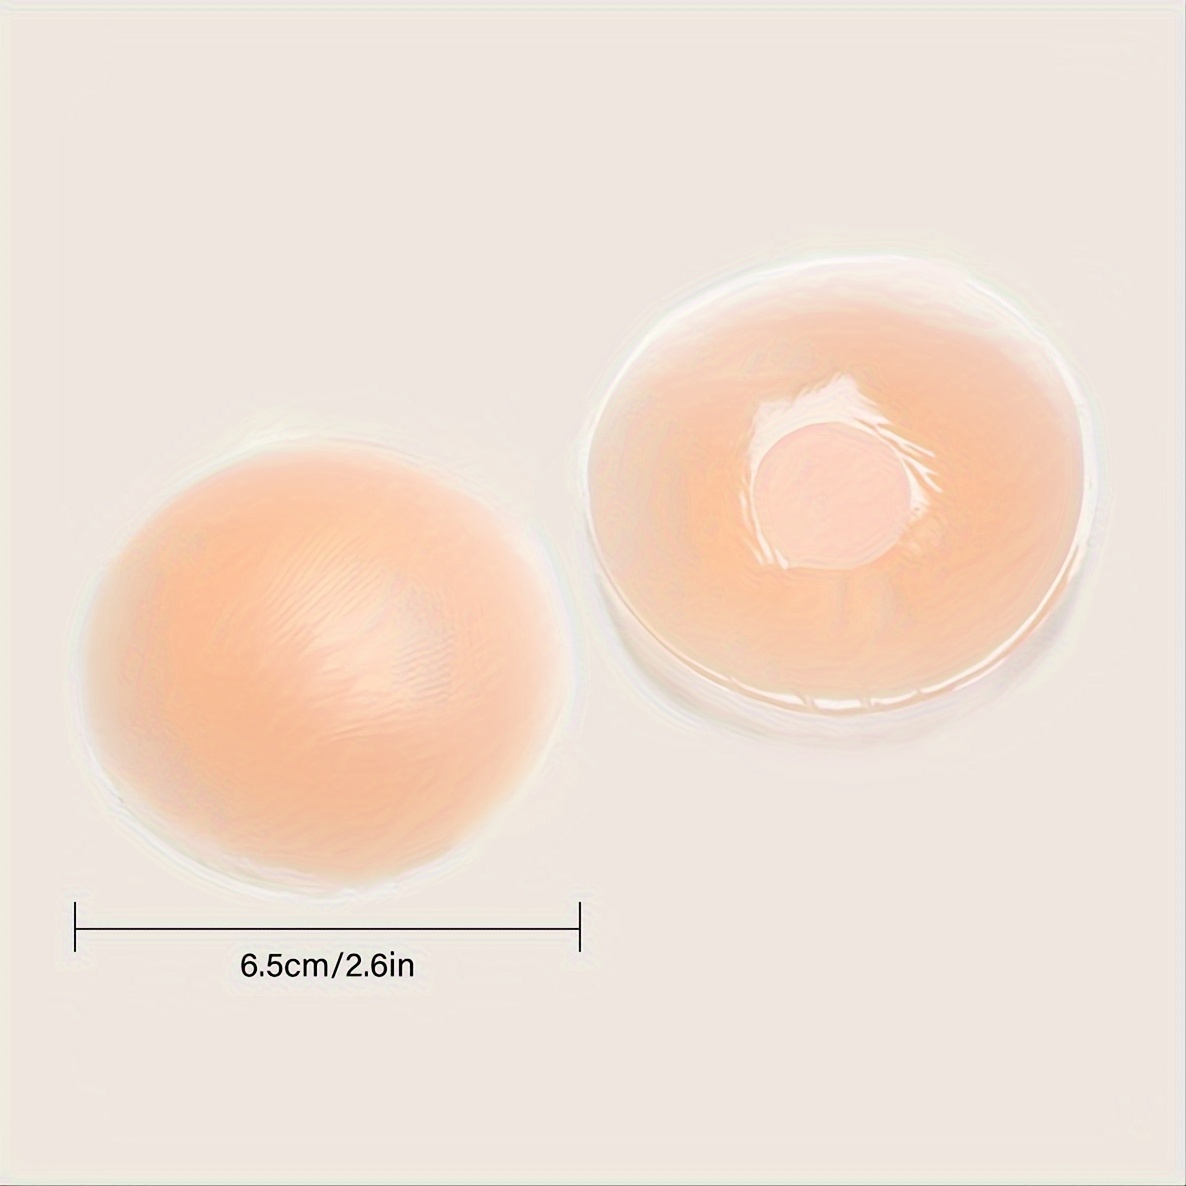 Silicone Self Adhesive Nipple Covers - NUDE